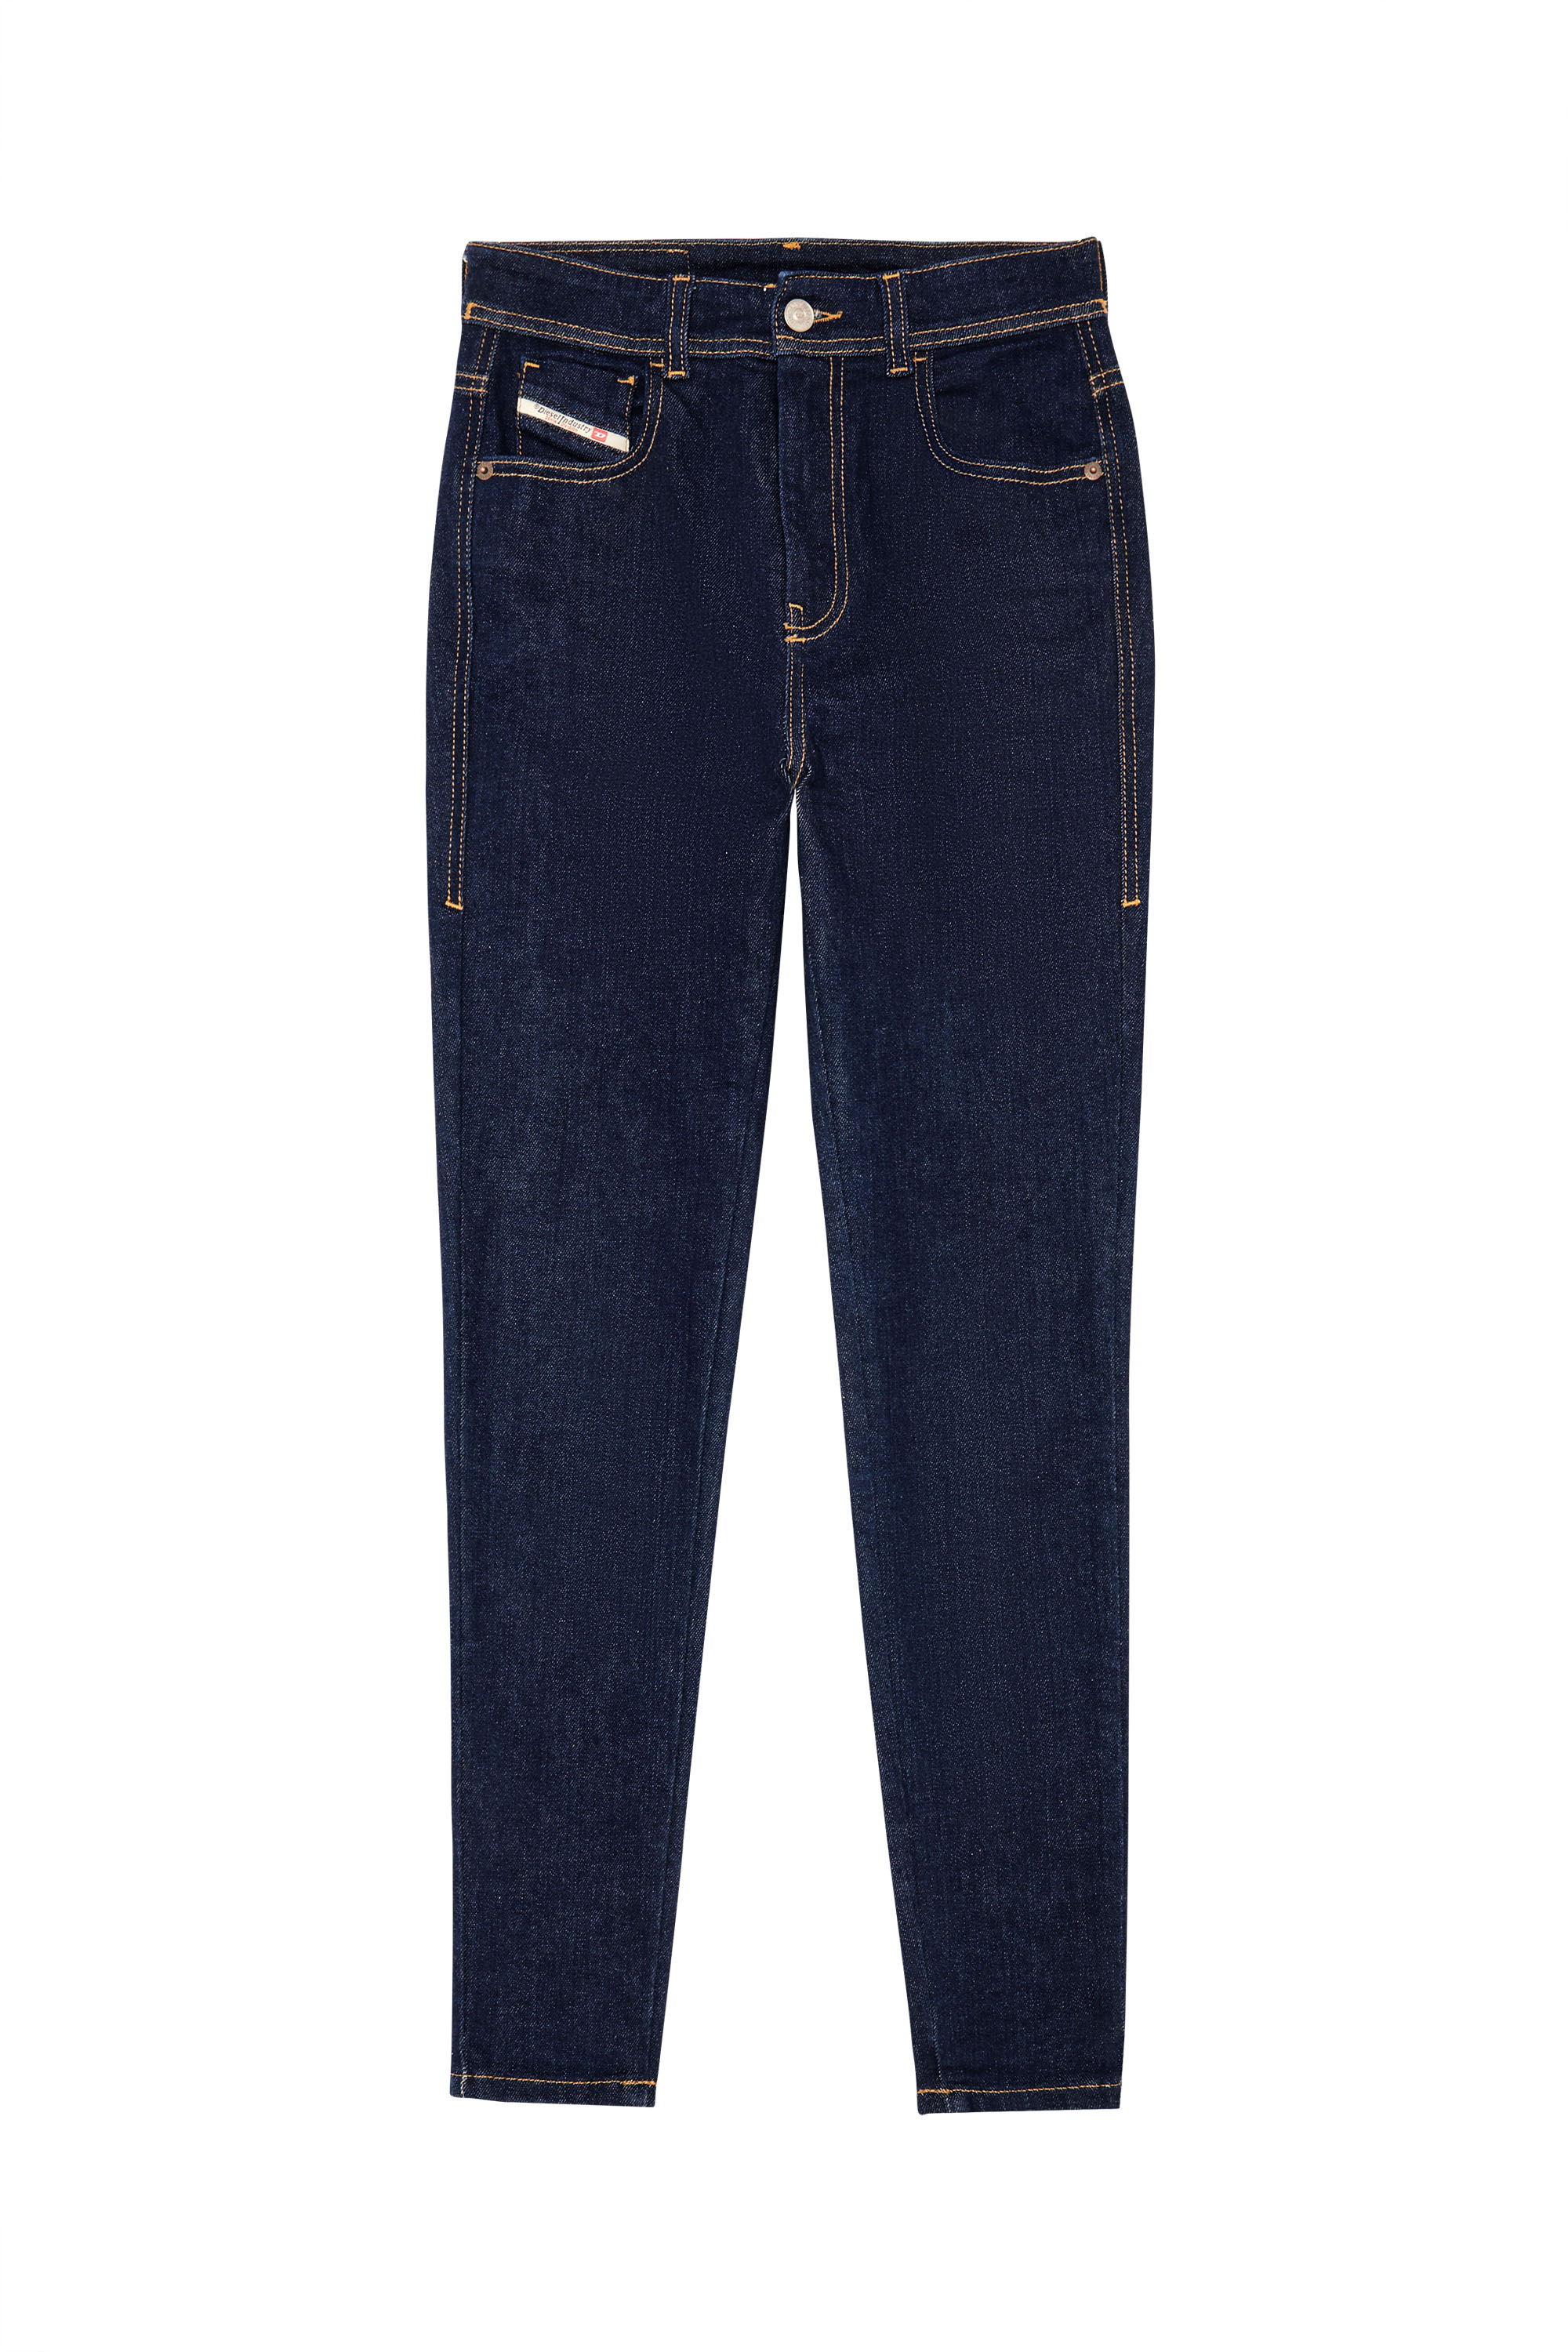 1984 SLANDY-HIGH Z9C18 Super skinny Jeans, Dark Blue - Jeans